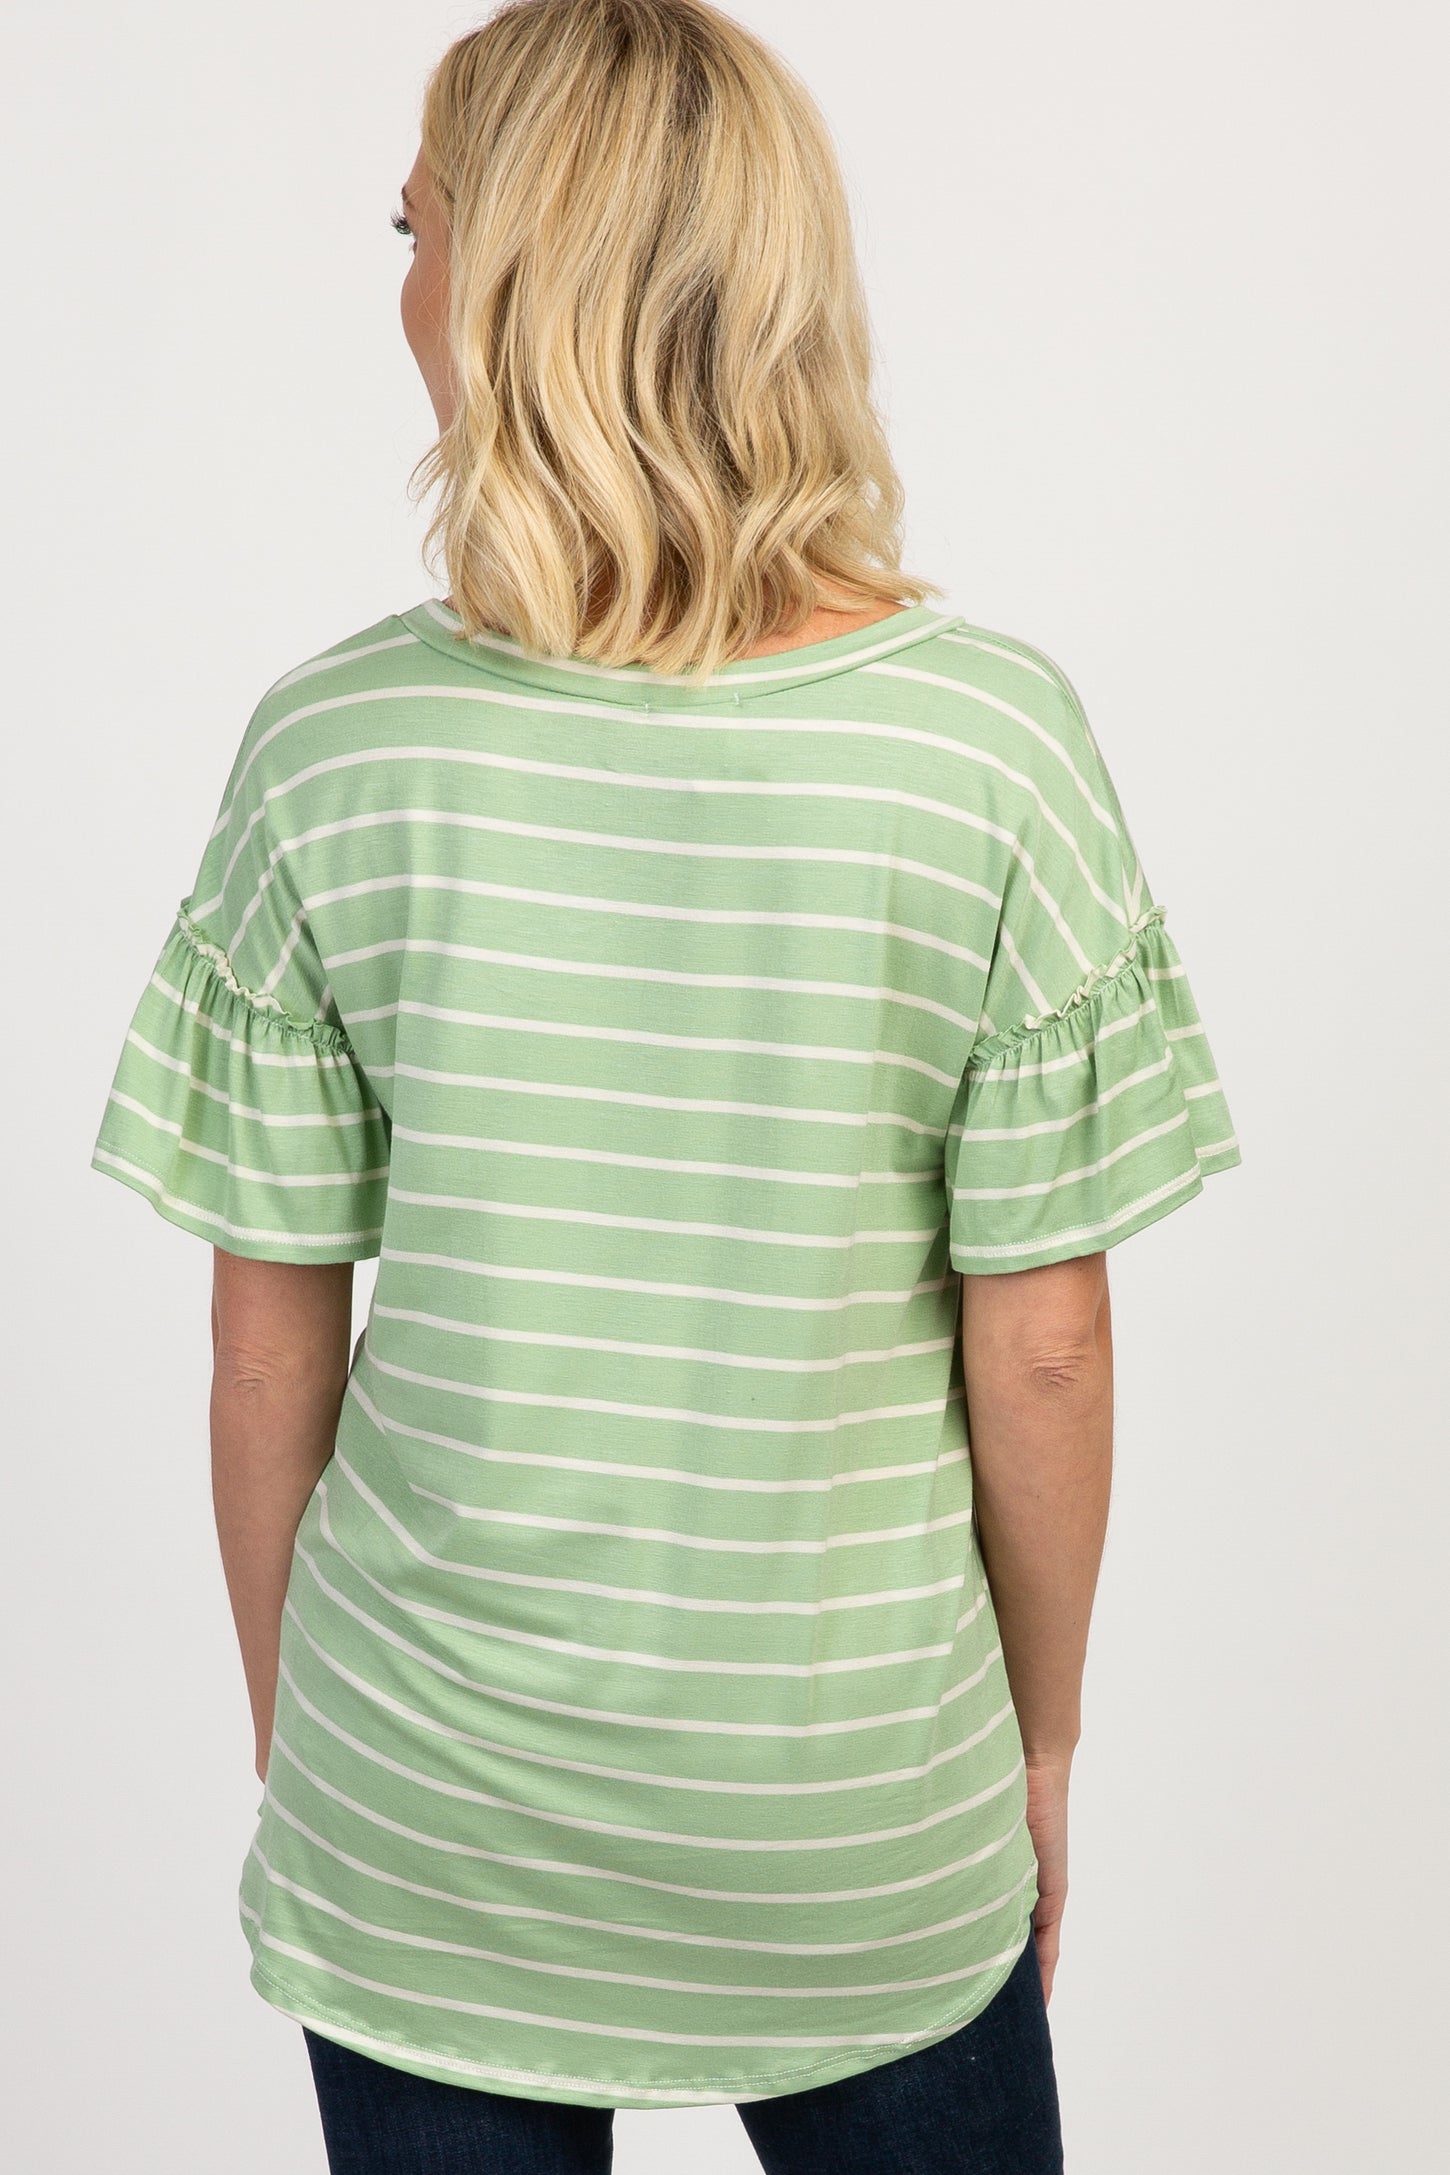 Mint Green Striped Ruffle Short Sleeve Top